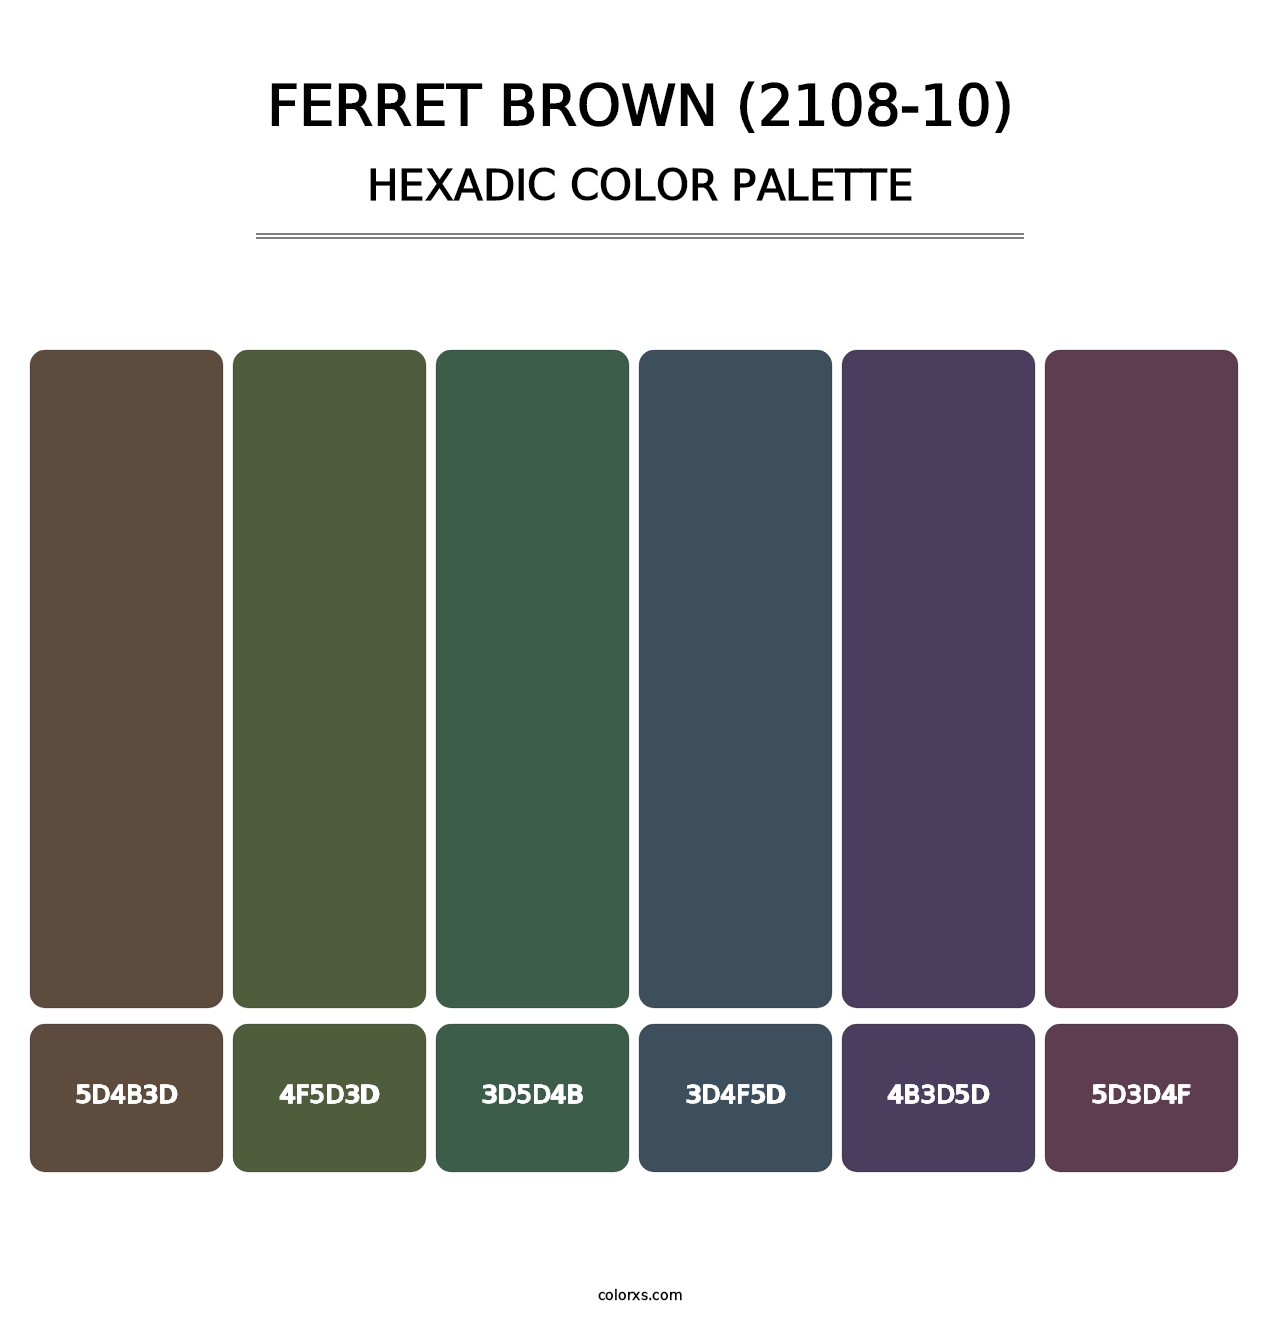 Ferret Brown (2108-10) - Hexadic Color Palette